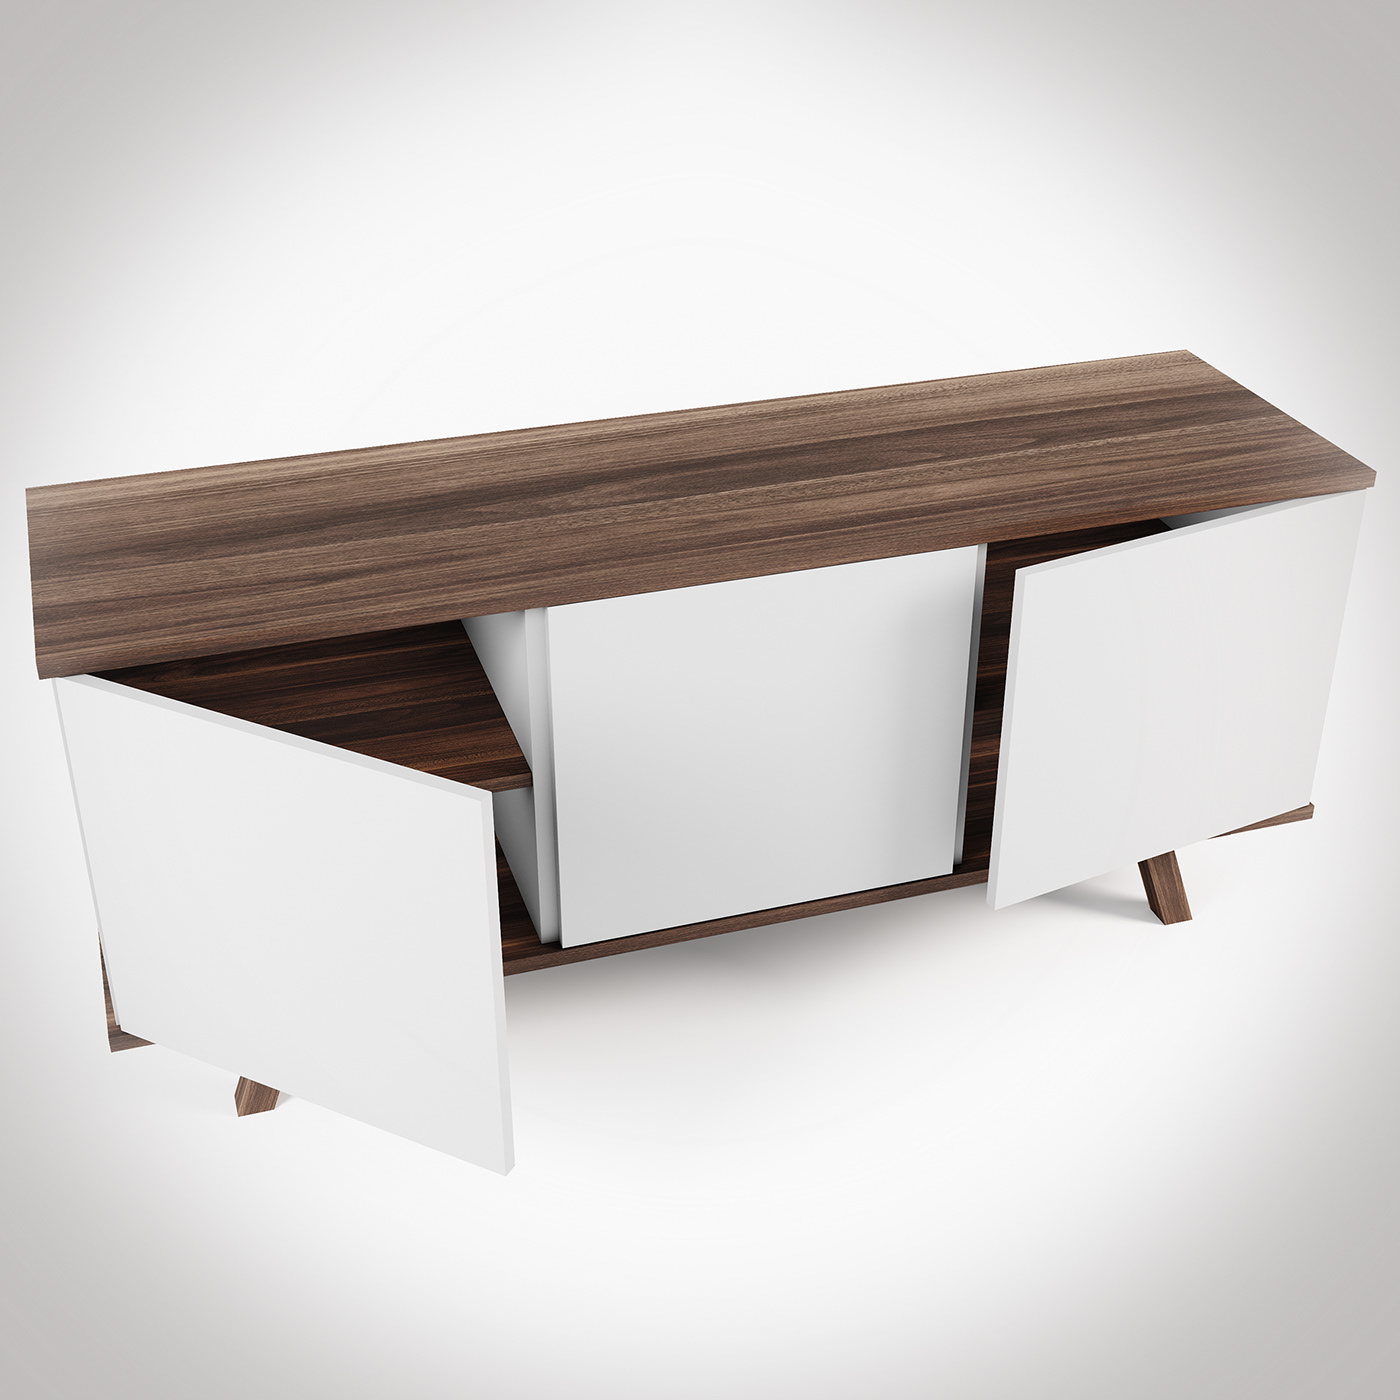 3D 3ds max CGI furniture furnituredesign Render sideboard visualization